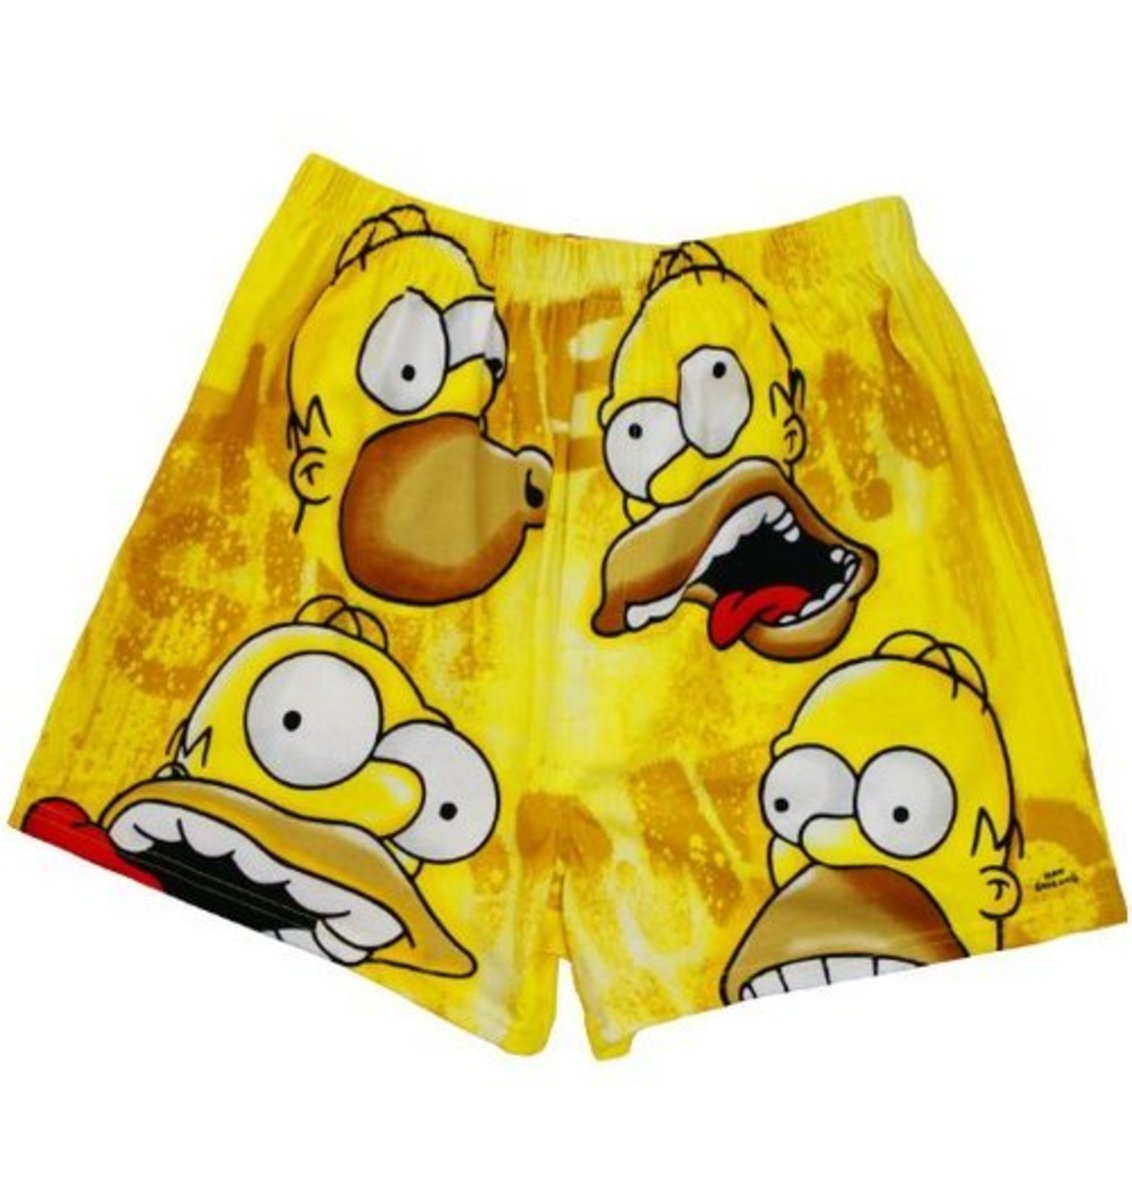 Homer Simpson boxer shorts